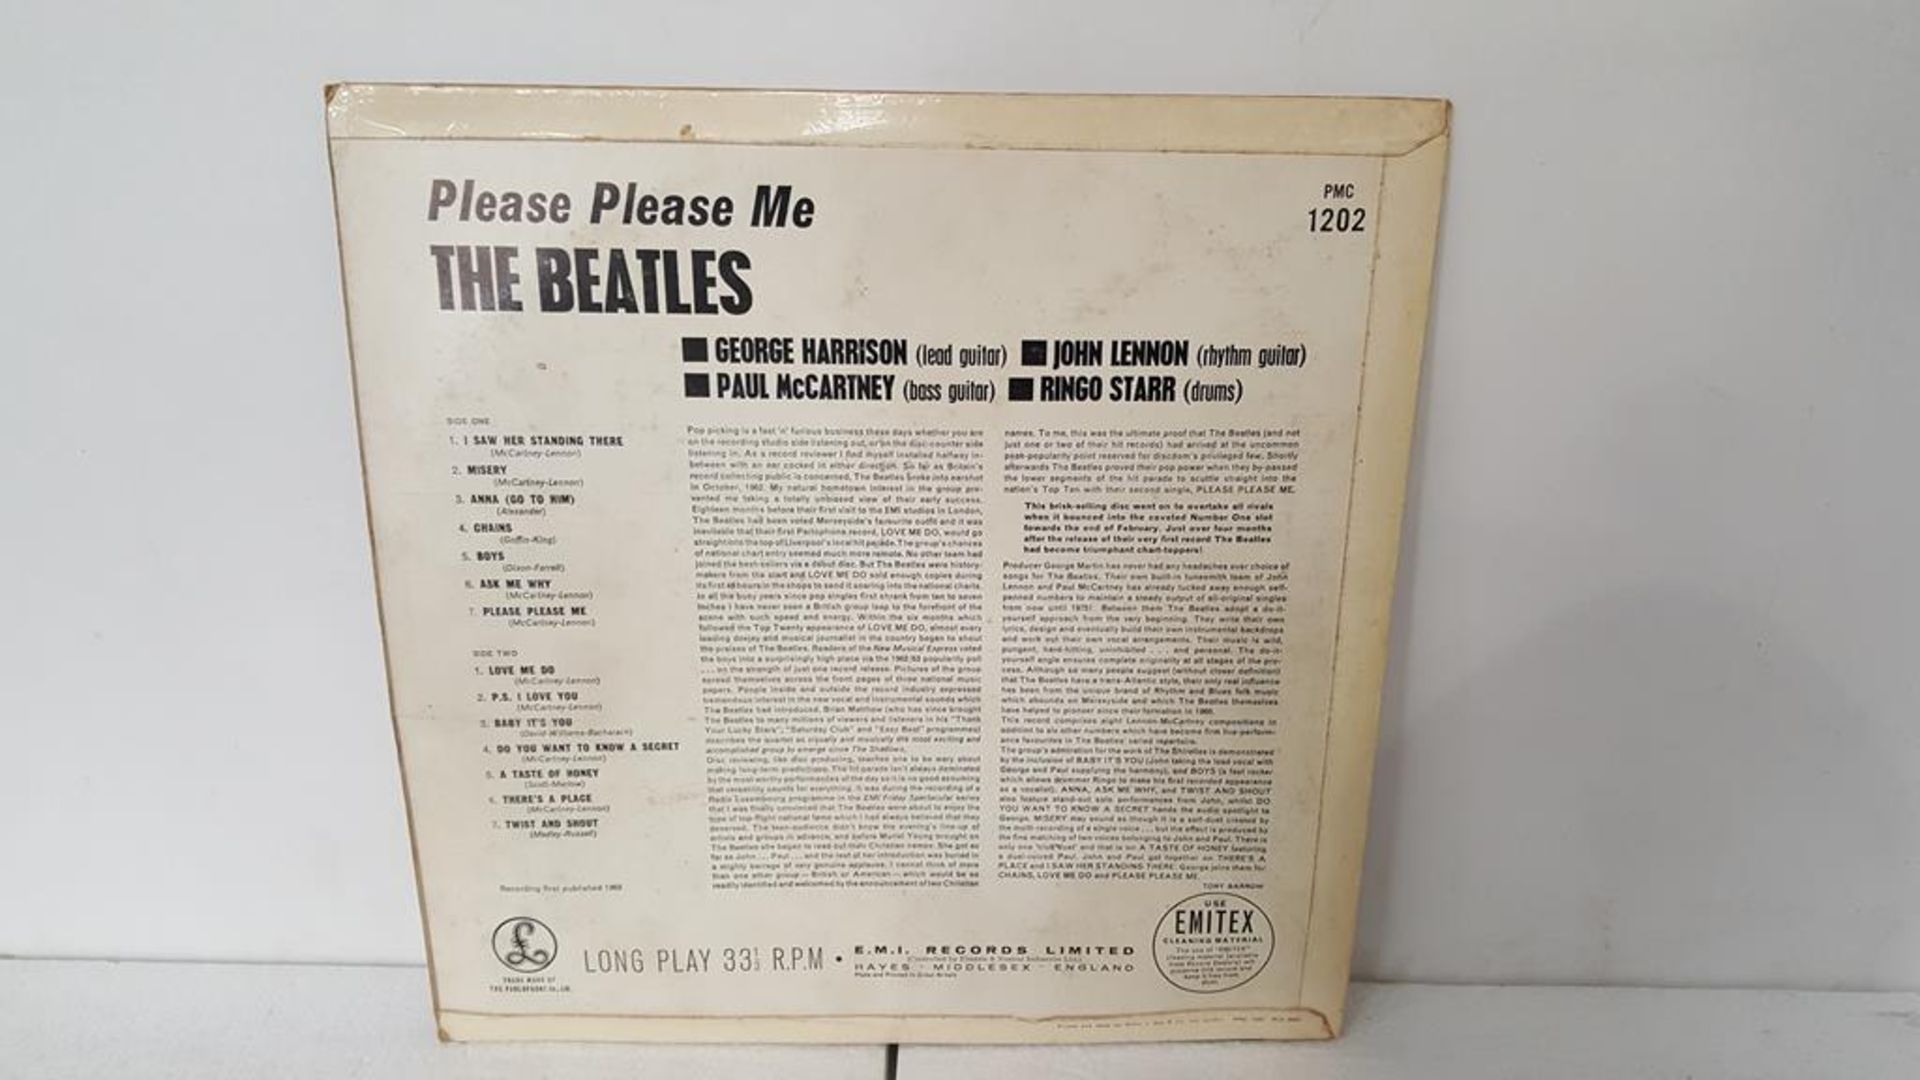 The Beatles 'Please Please Me' LP - Image 2 of 4